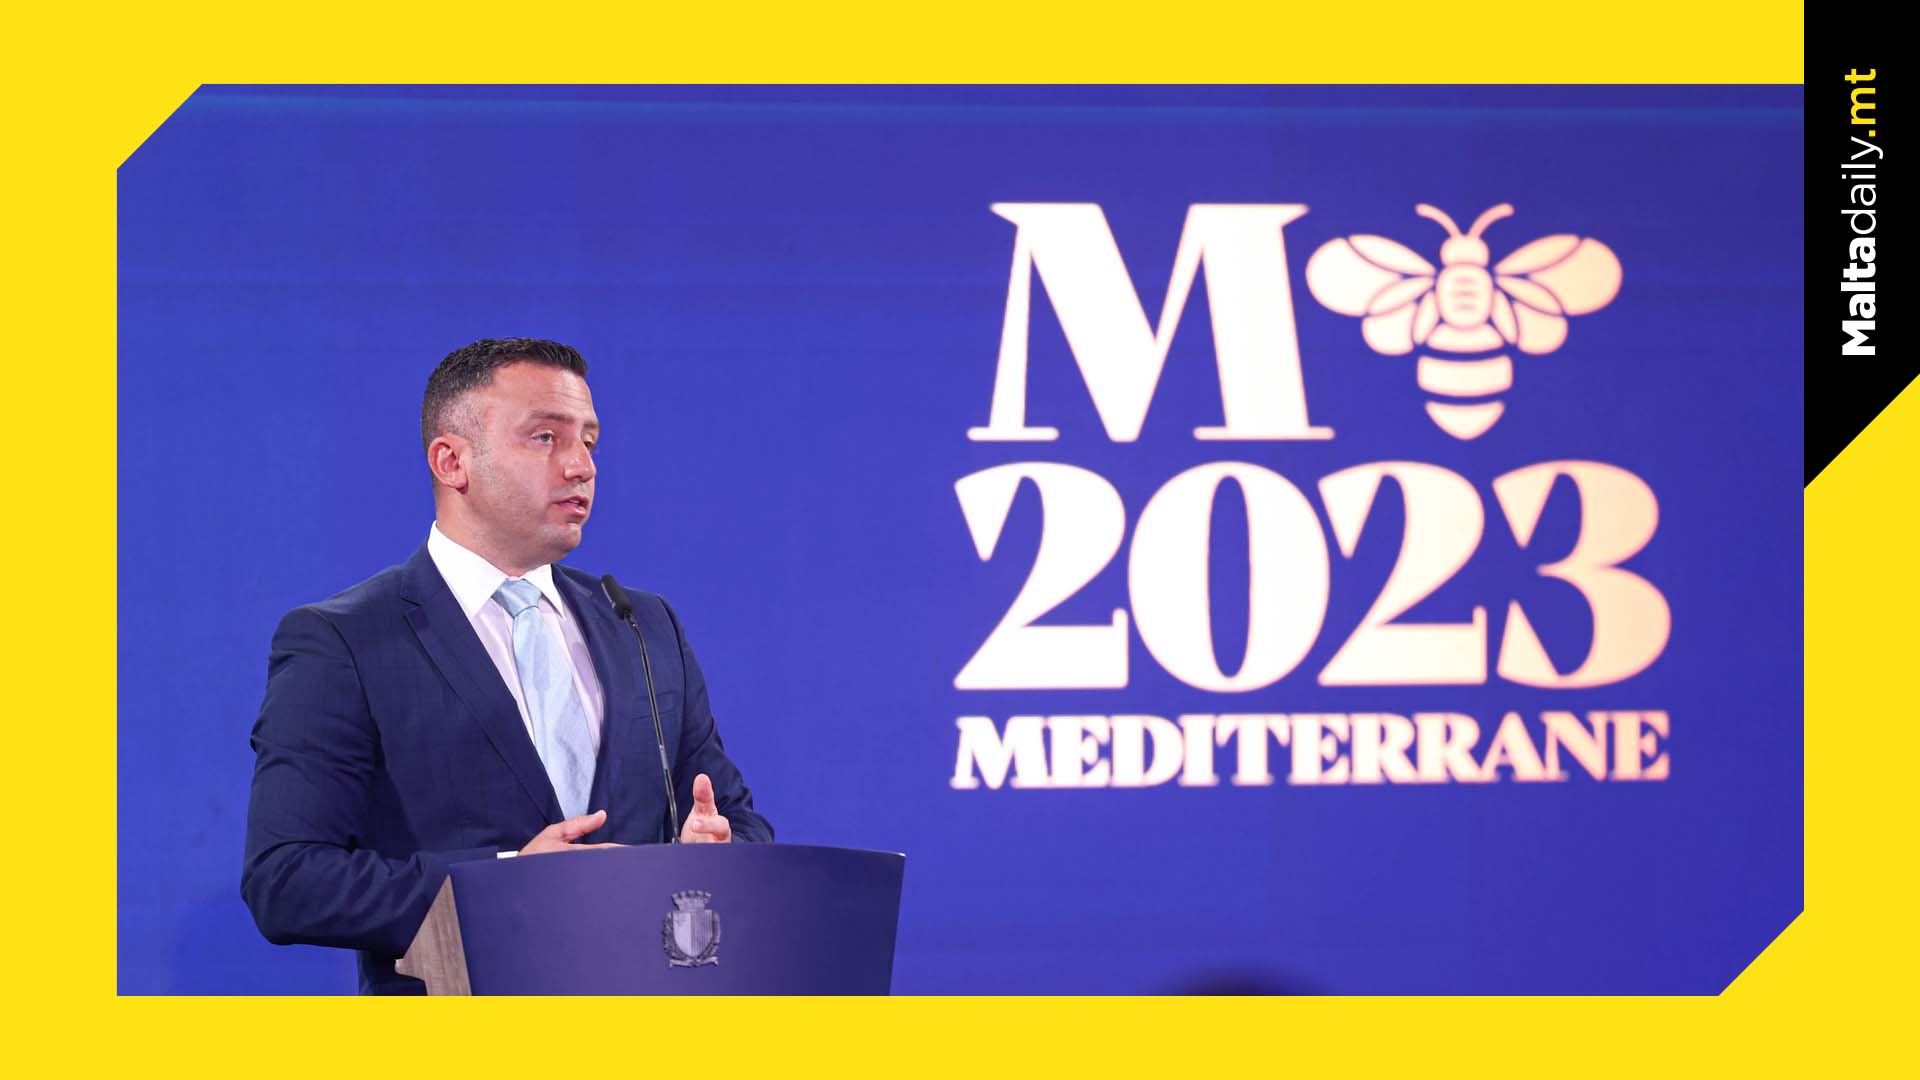 Mediterrane Film Festival unites the film industry in Malta